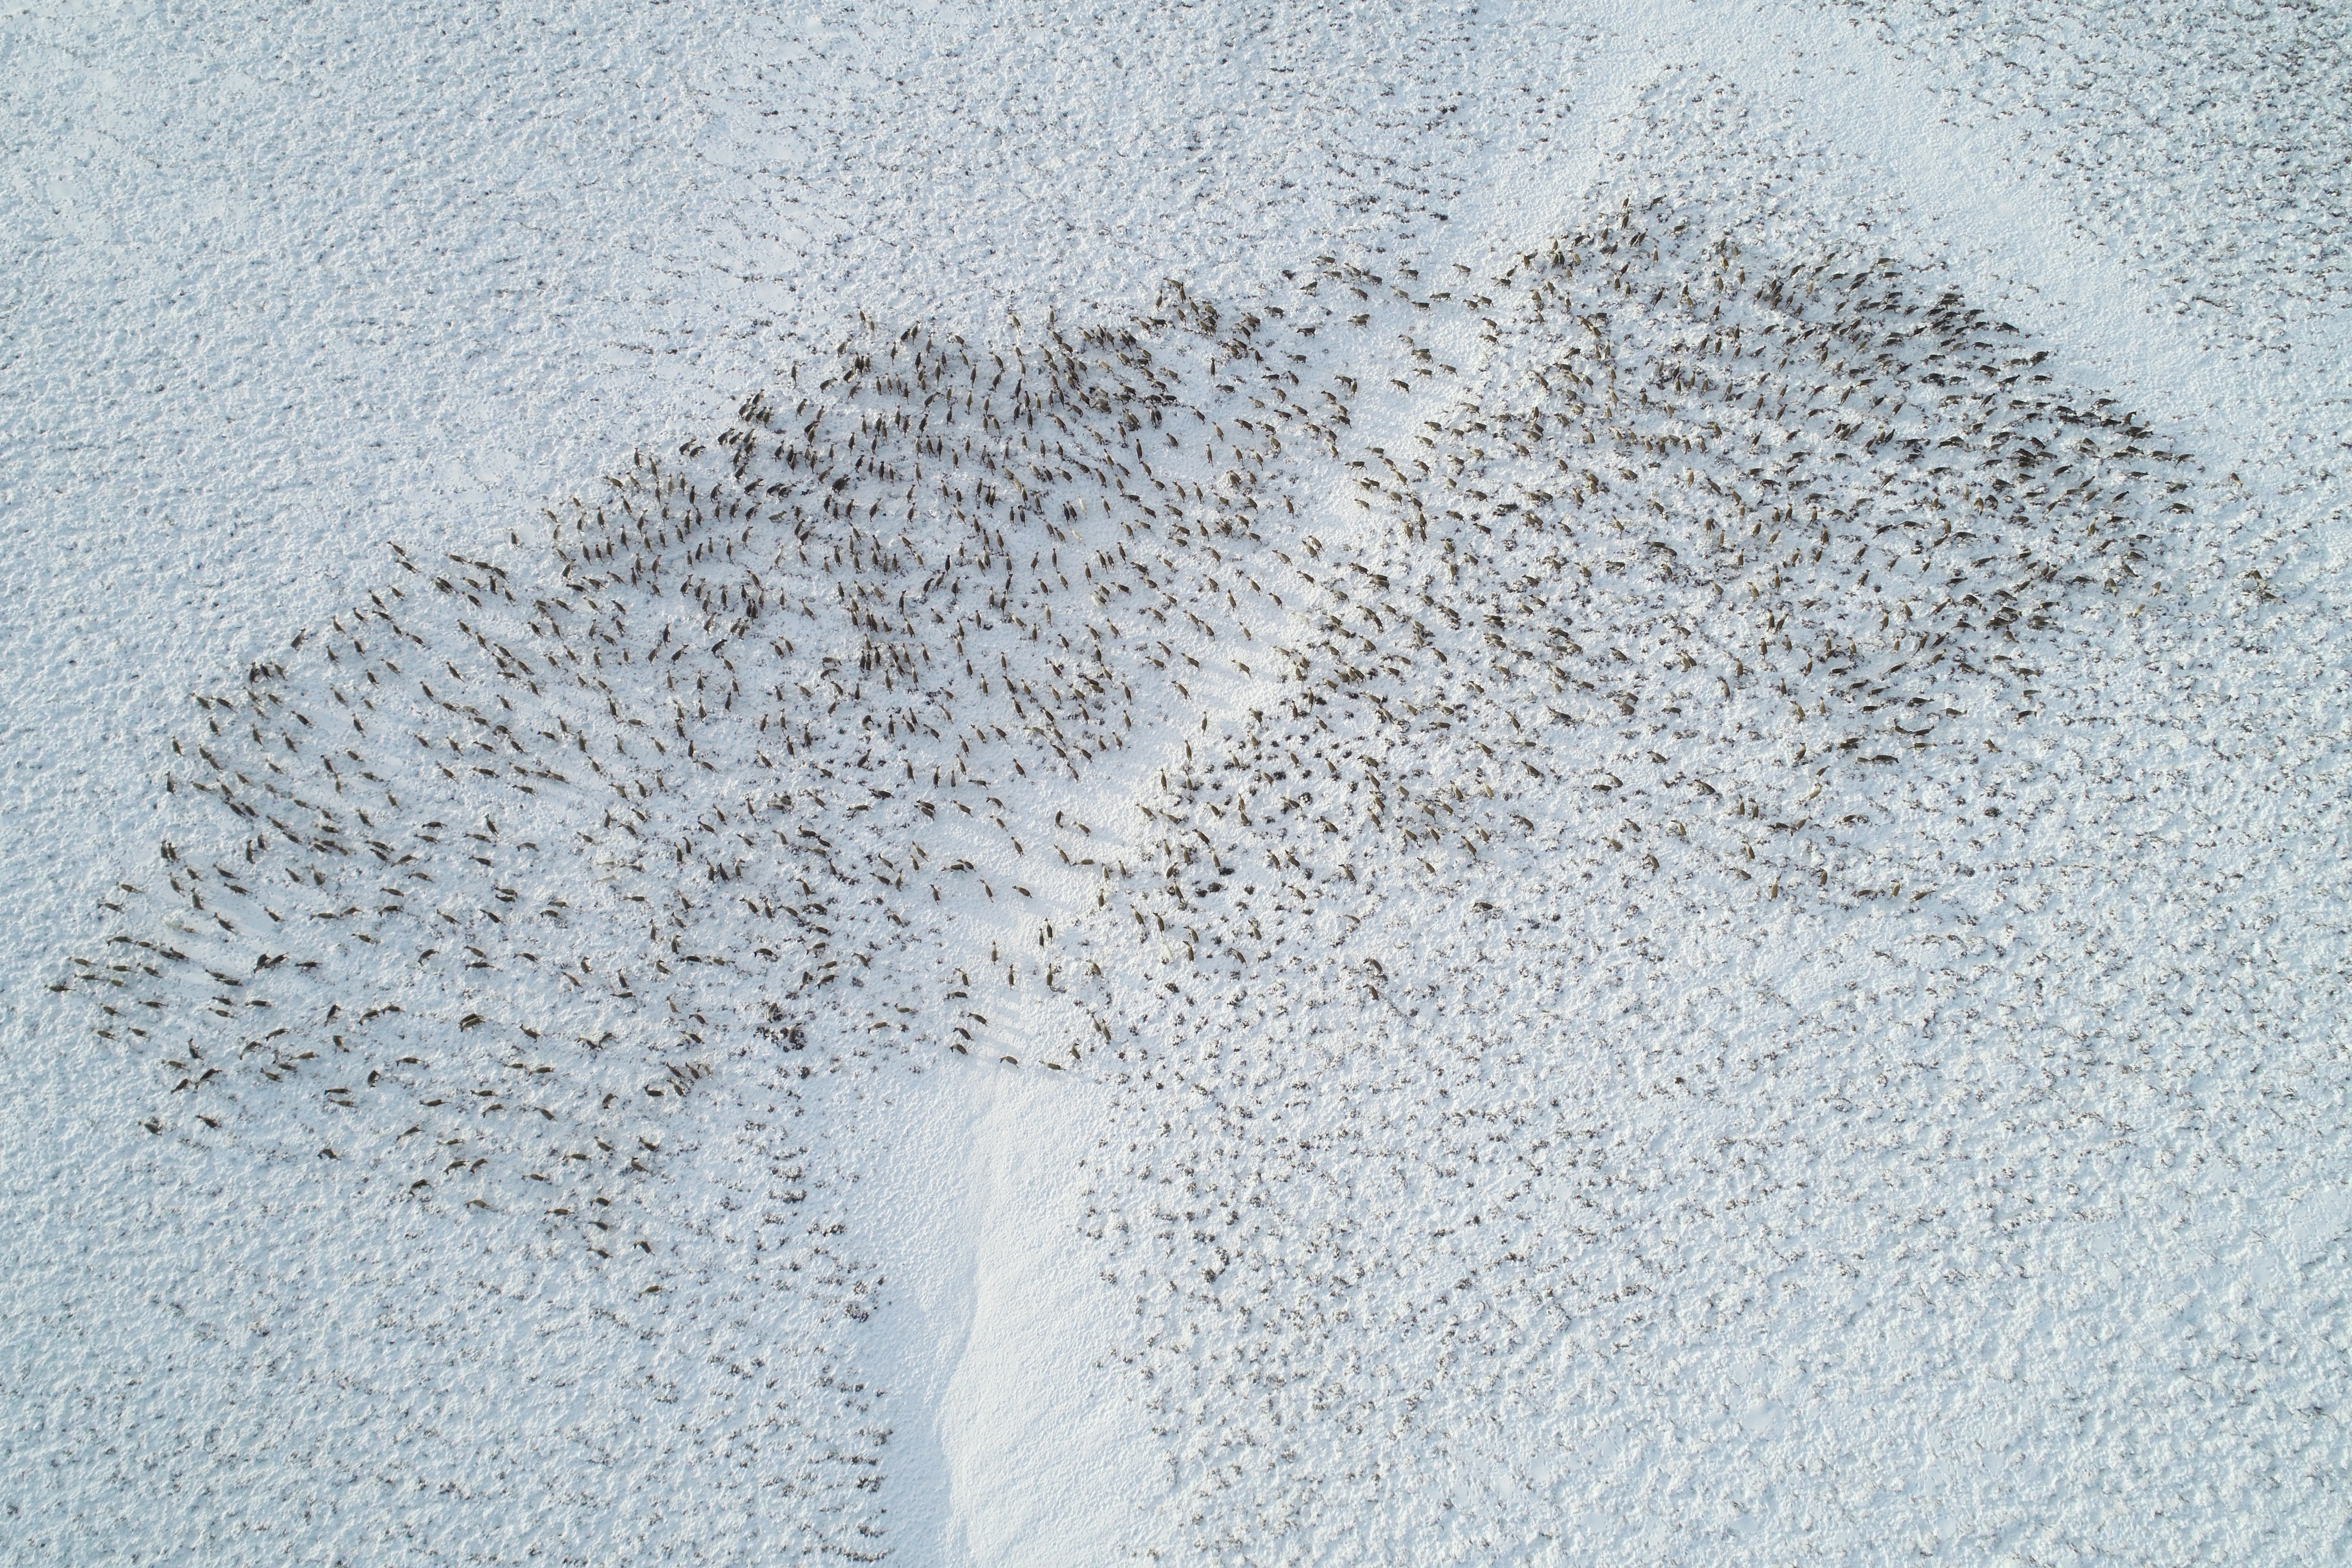 The Largest Deer Herd Found on Bering Island